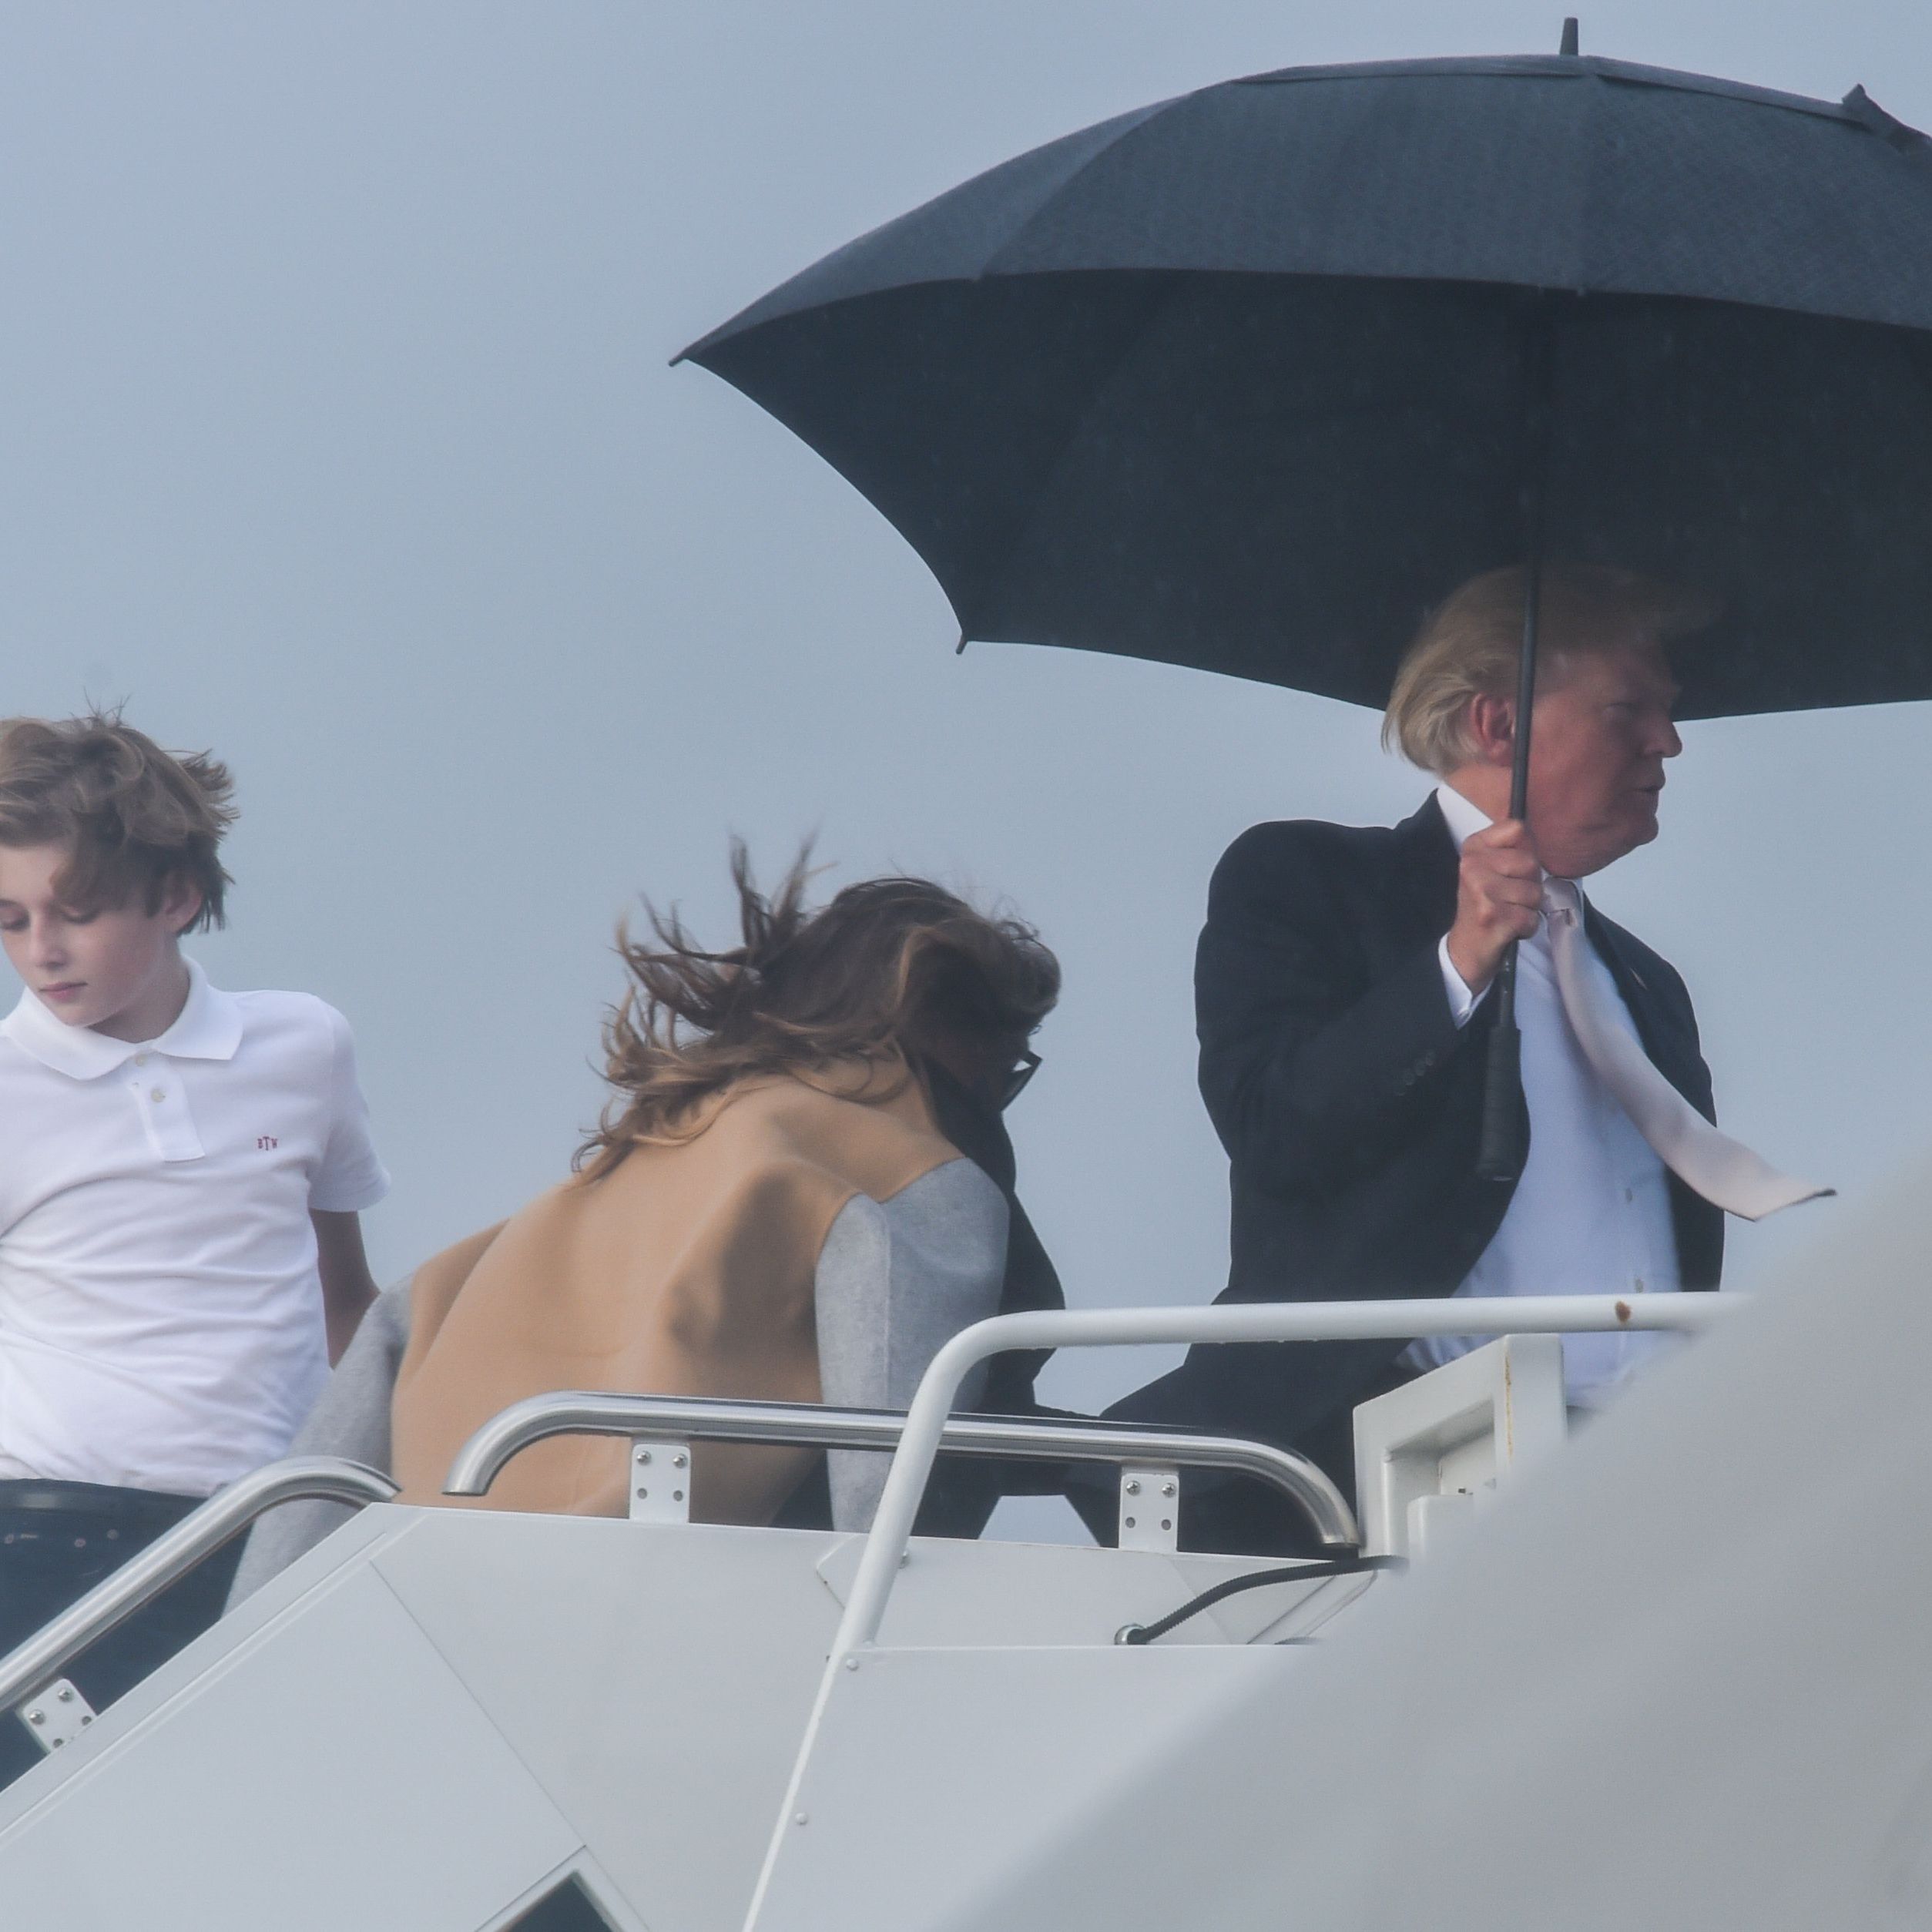 Donald Trump Won T Share Umbrella With Melania And Barron Marie Claire